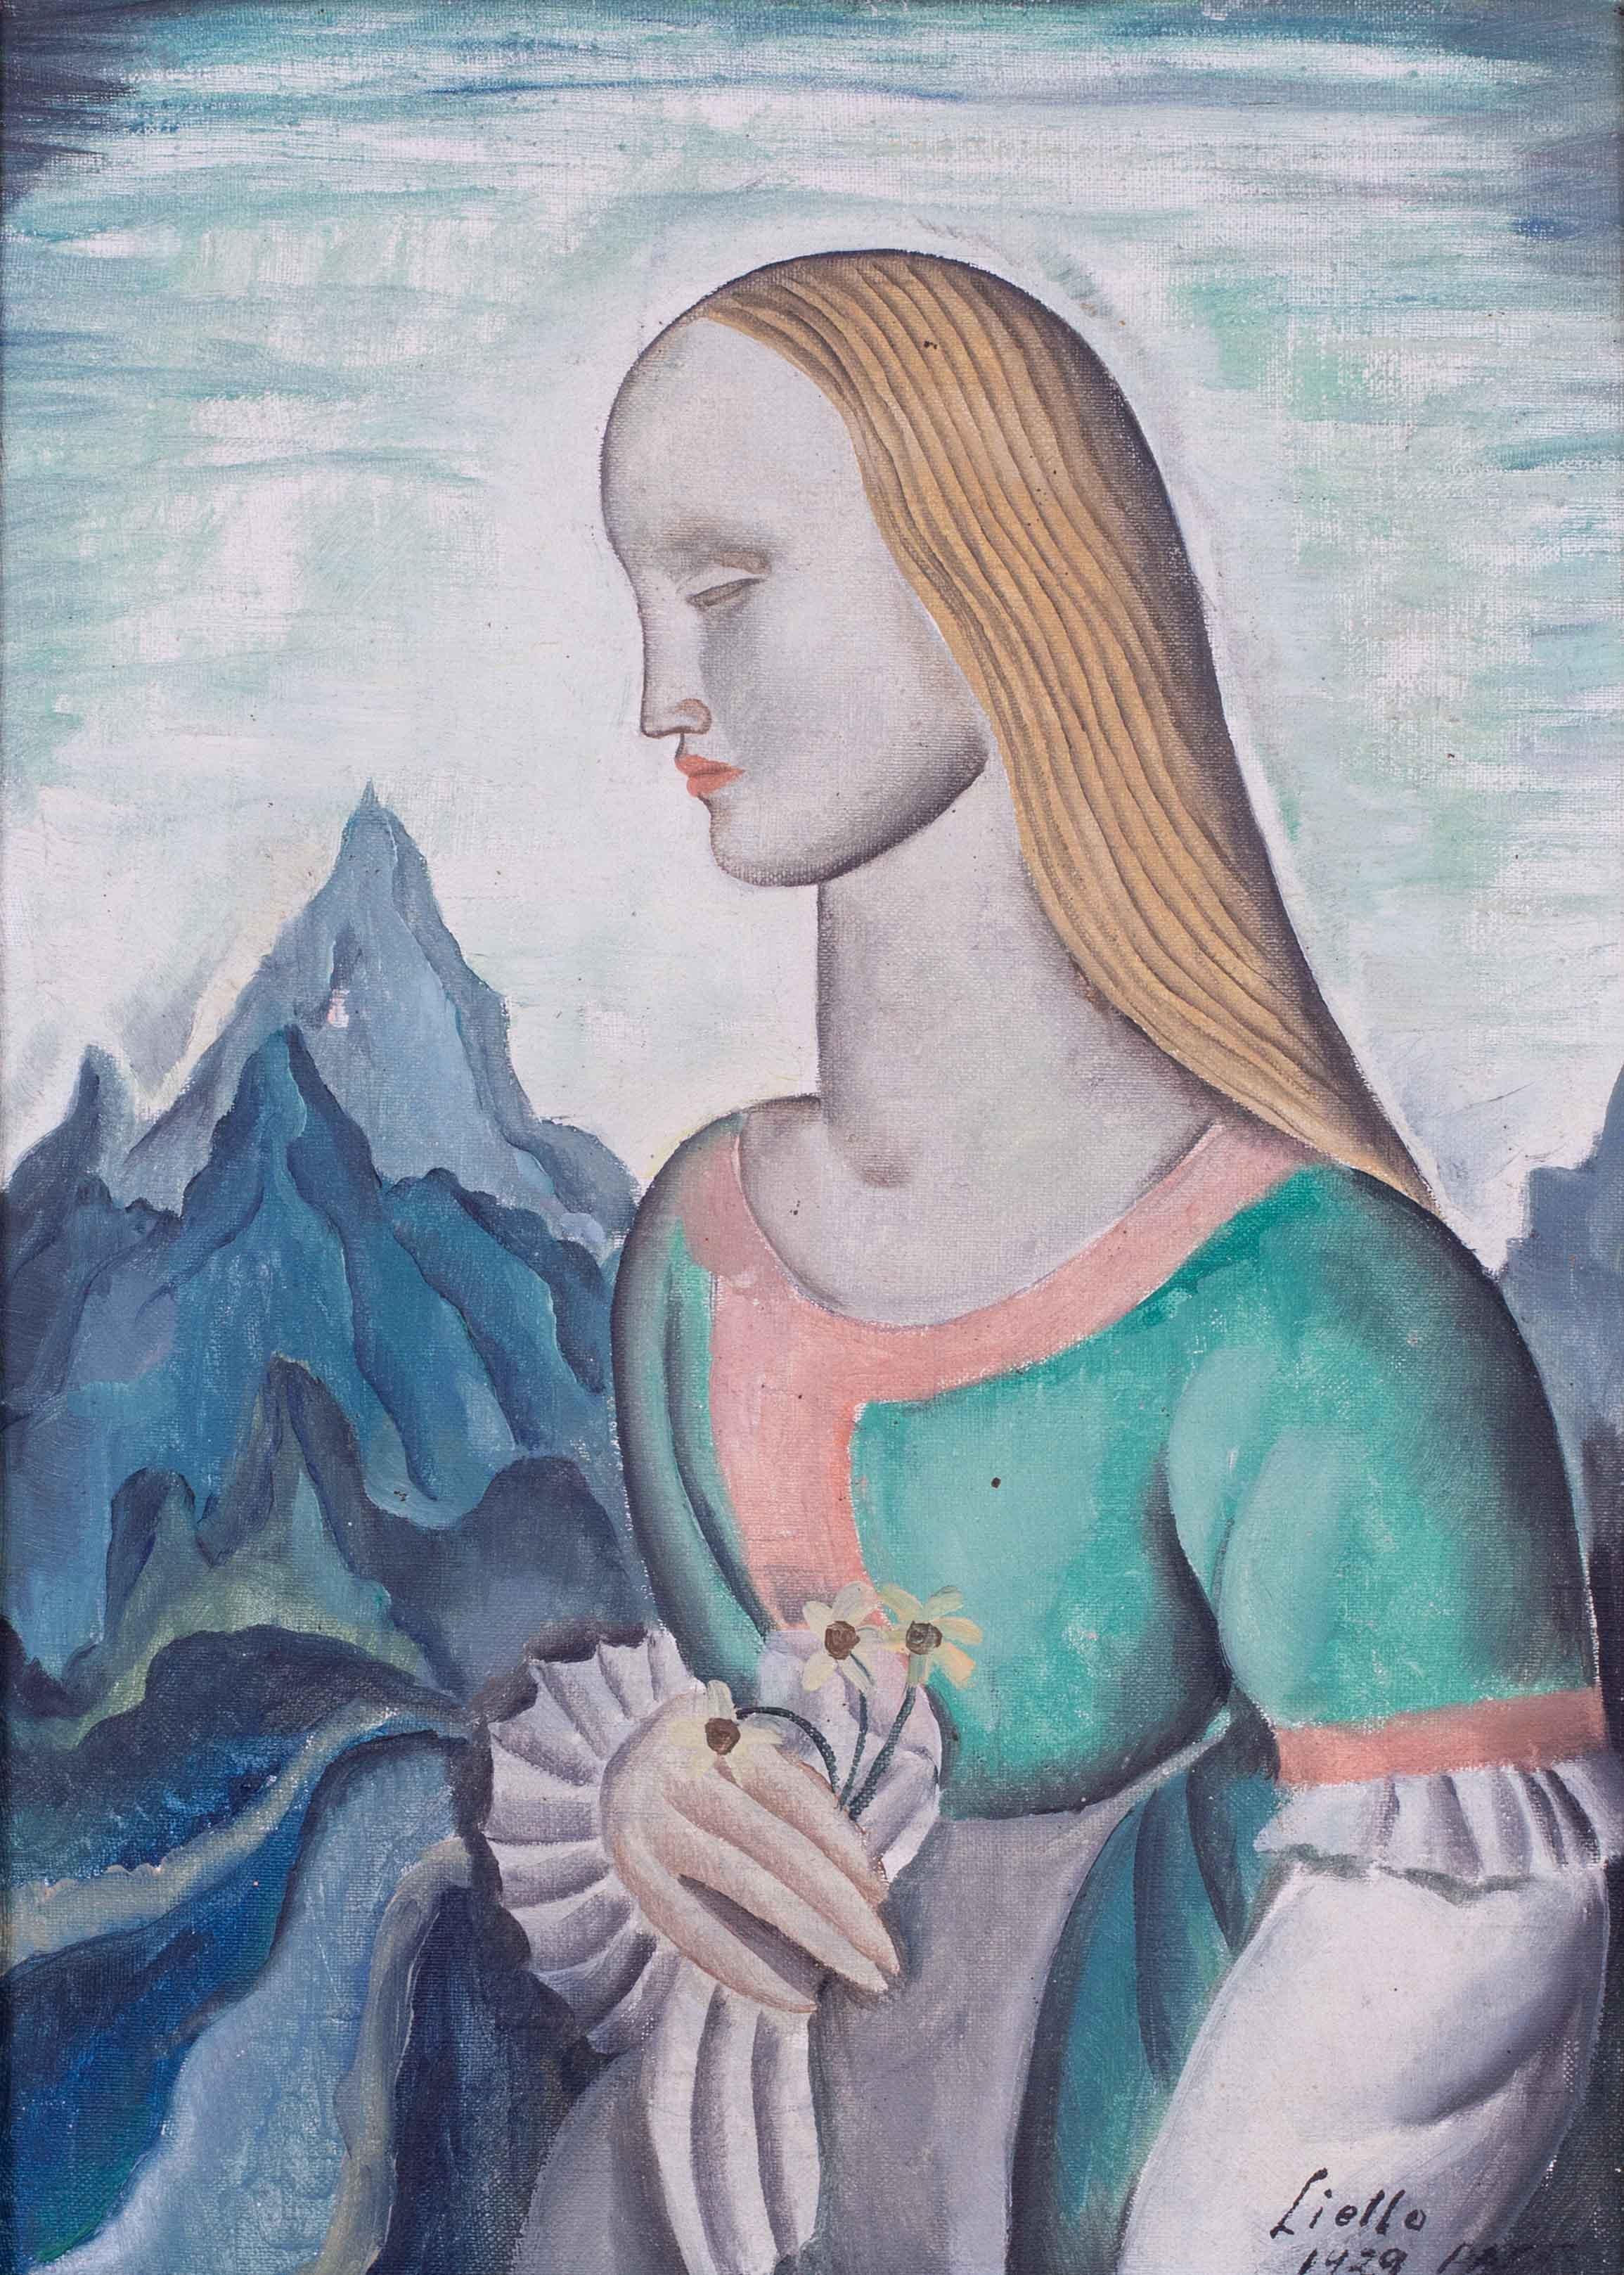 1929 art deco Oil painting of a lady by Italian / American artist Liello - Painting by Giuseppe (John) Liello